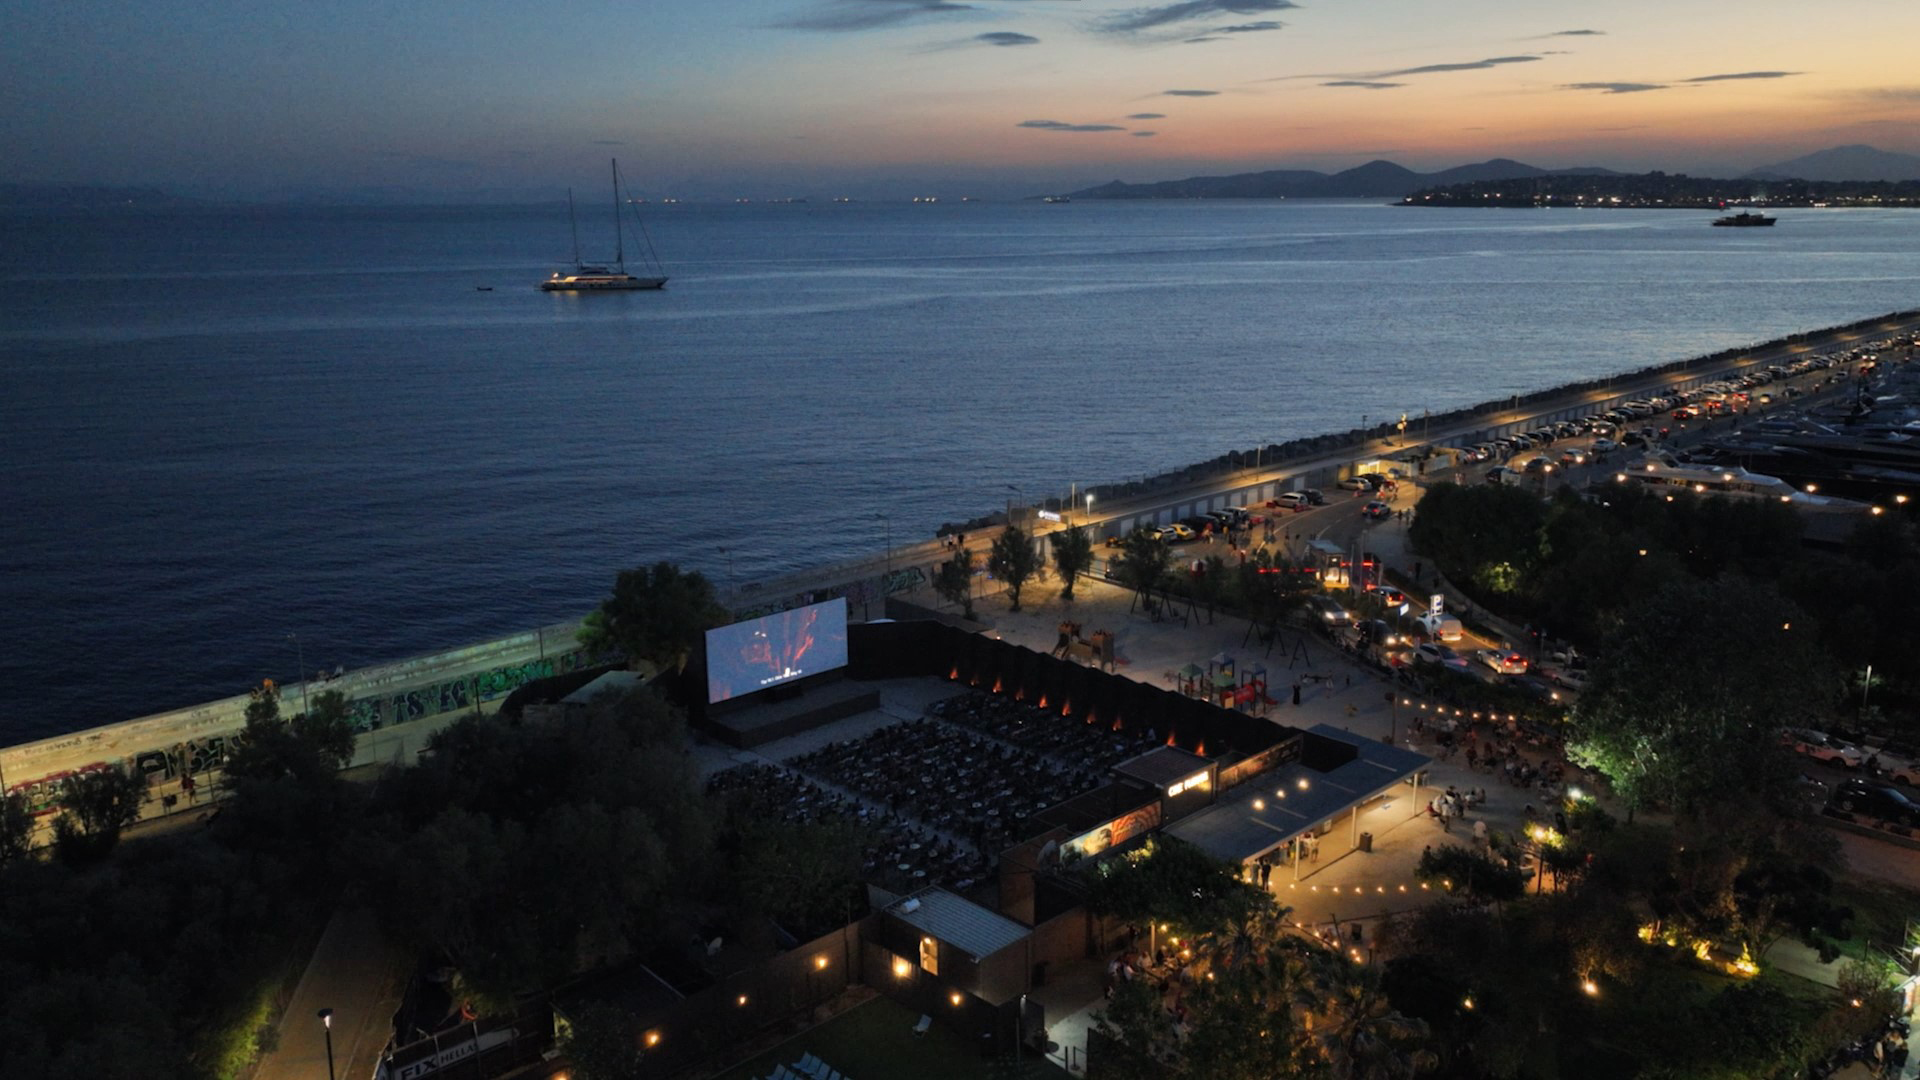 Aerial view of an open-air cinema in Alimos